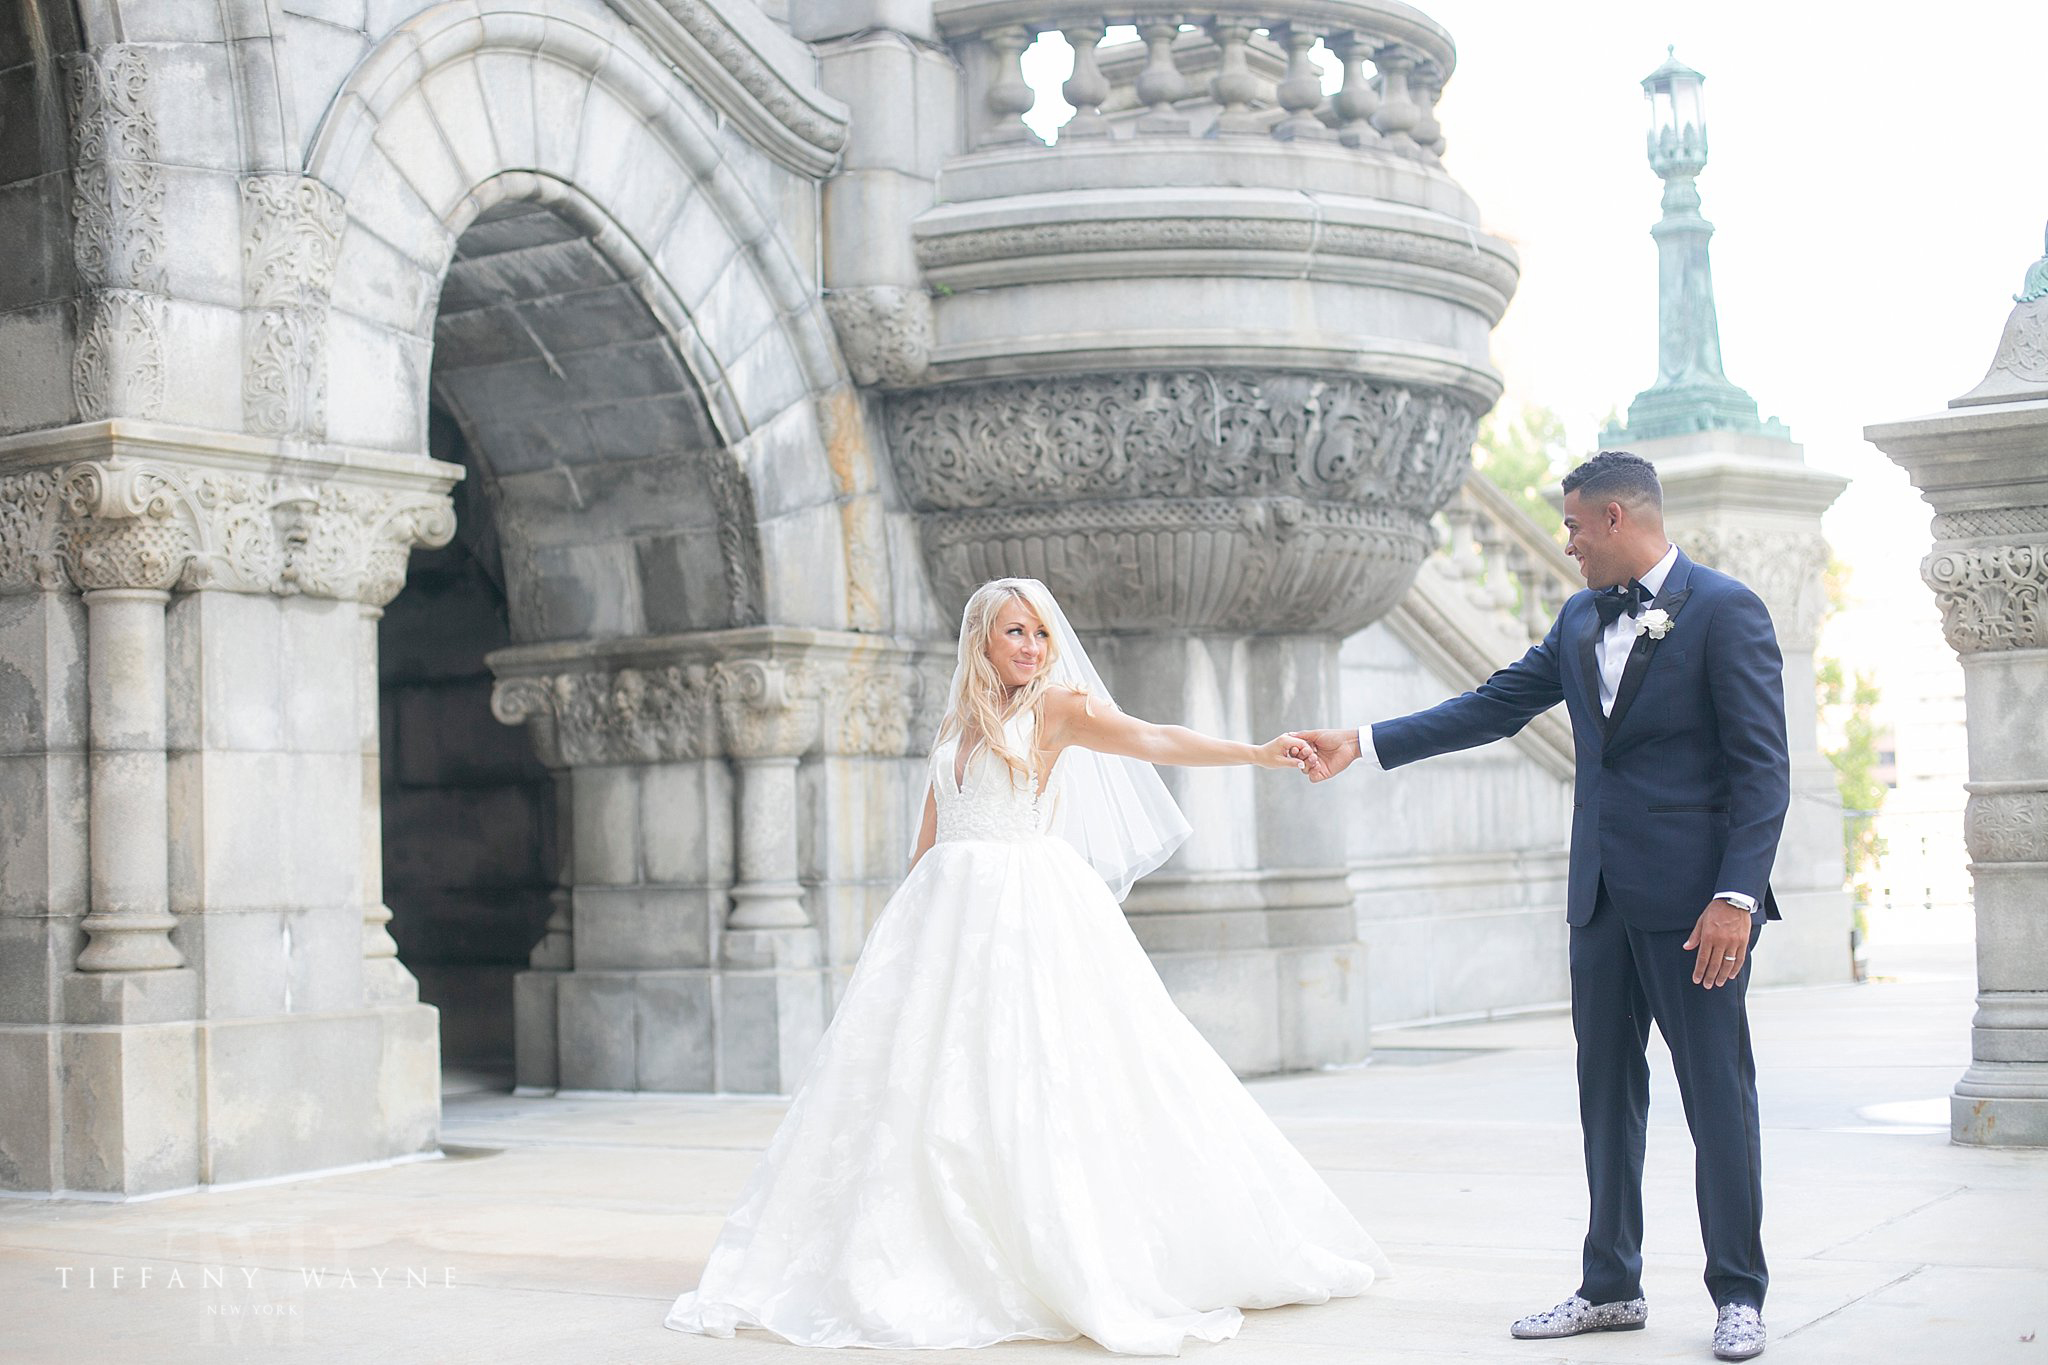 New York wedding photographer Tiffany Wayne Photography captures wedding day